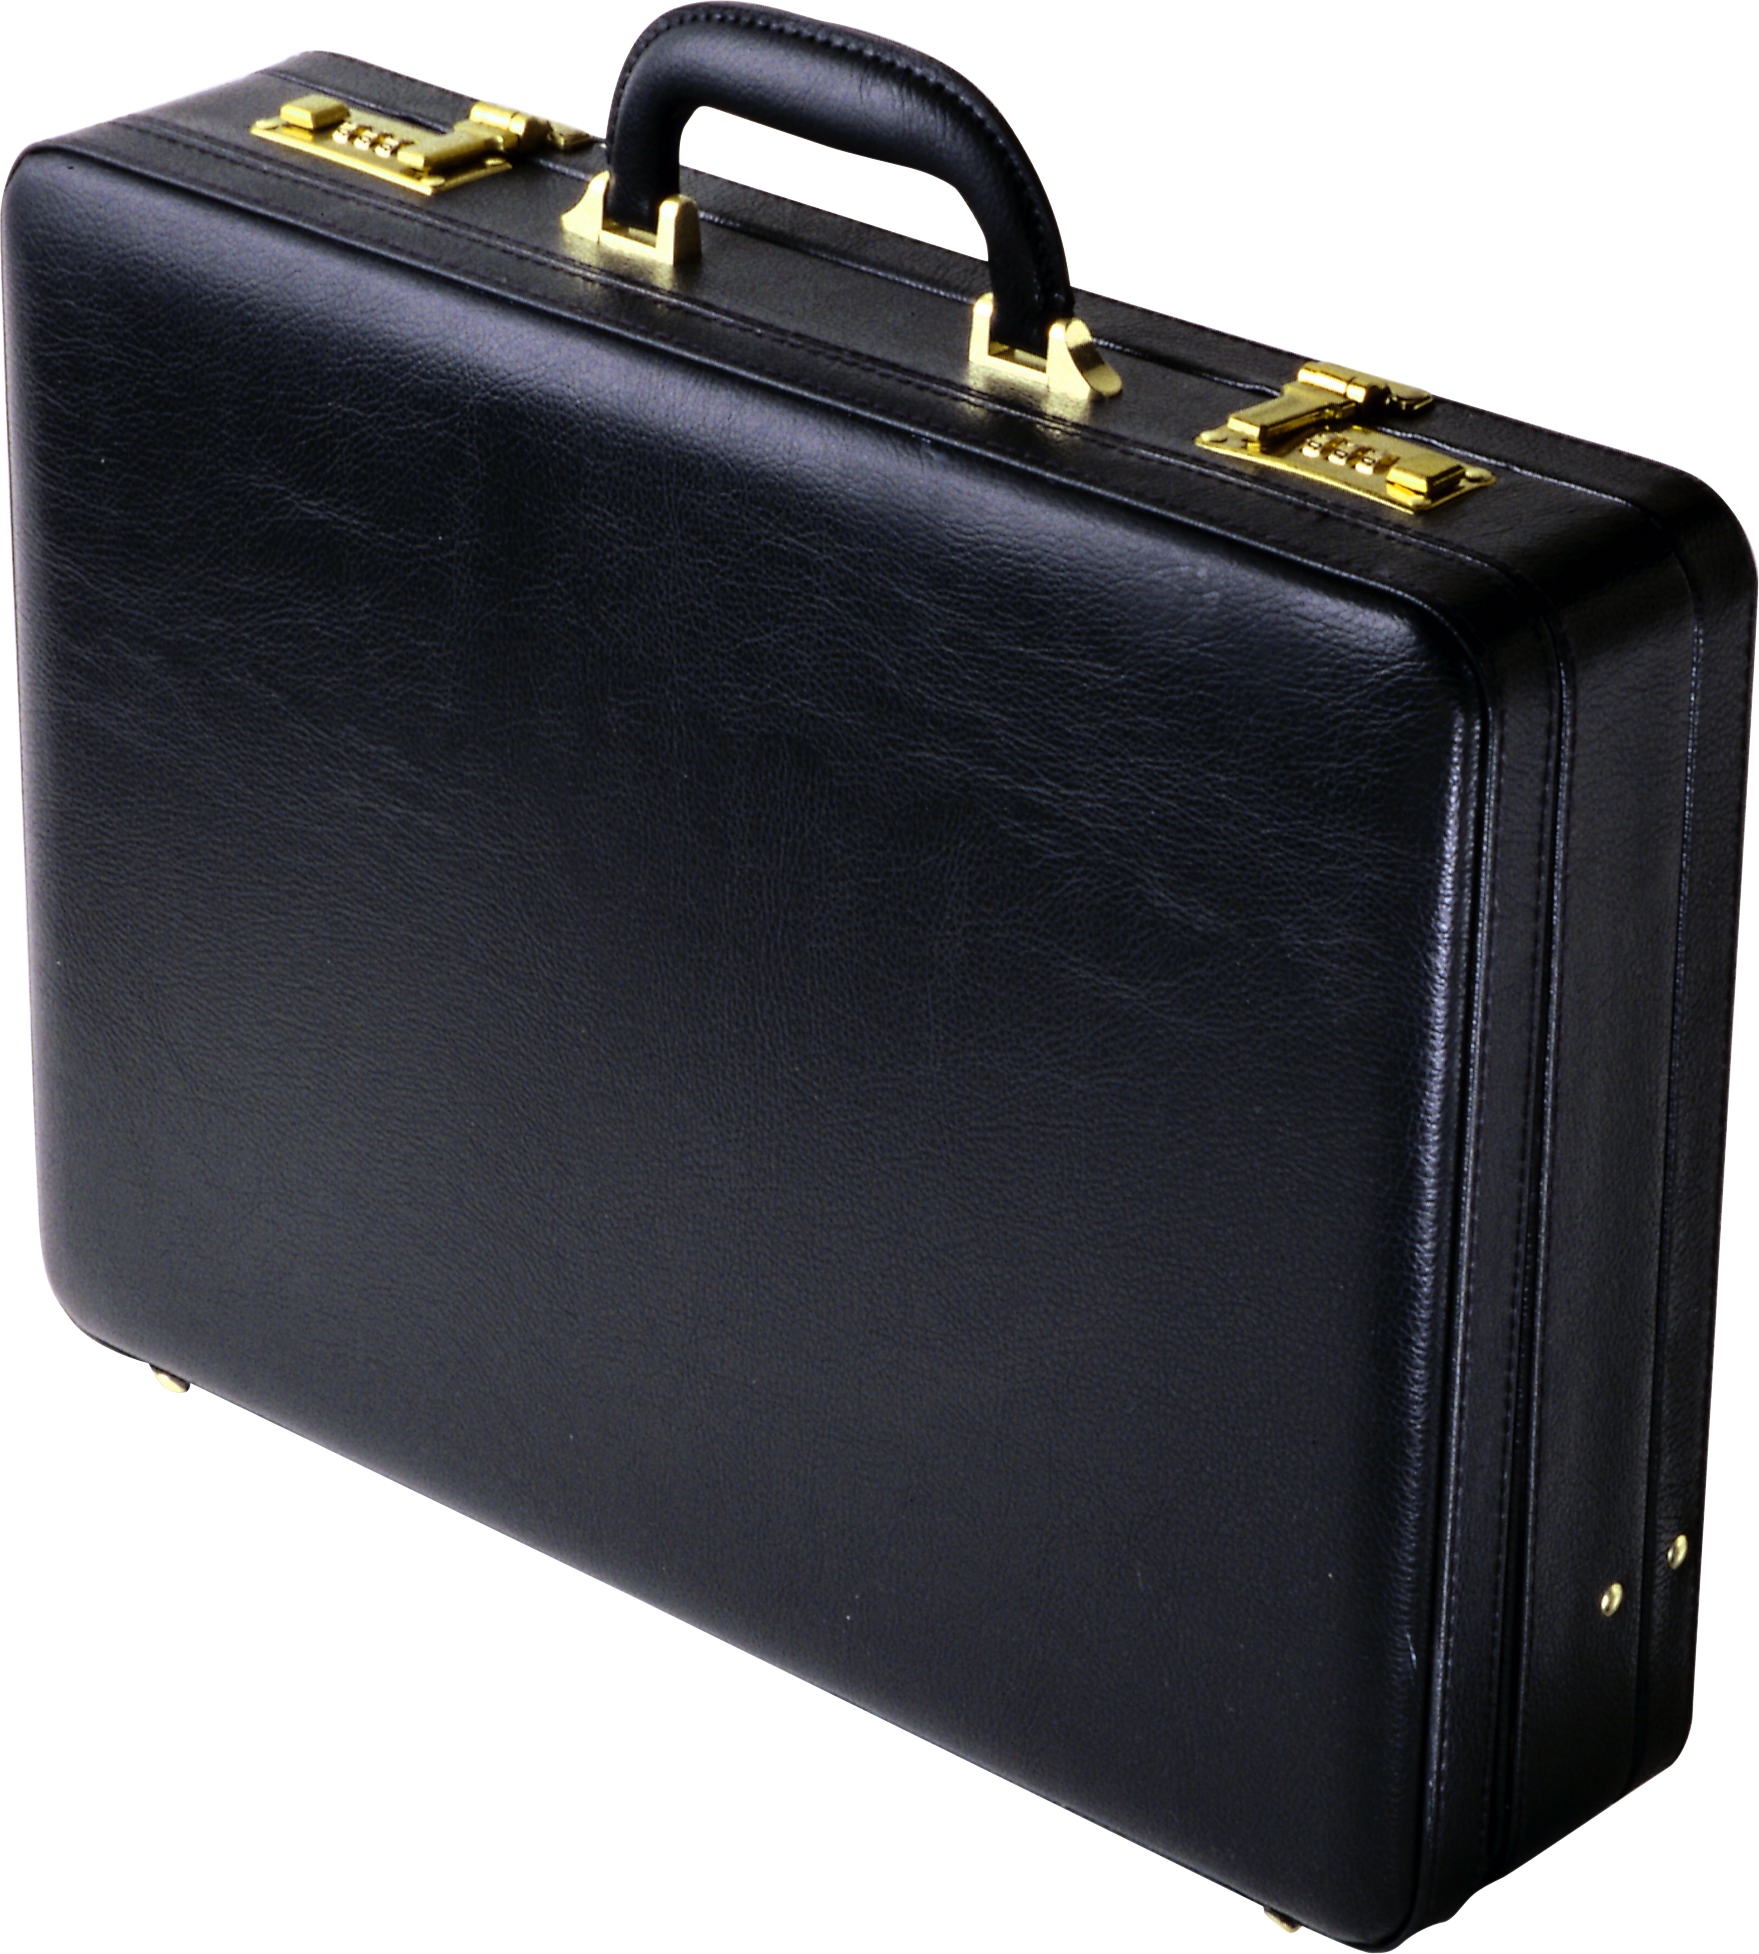 Black Suitcase PNG Image